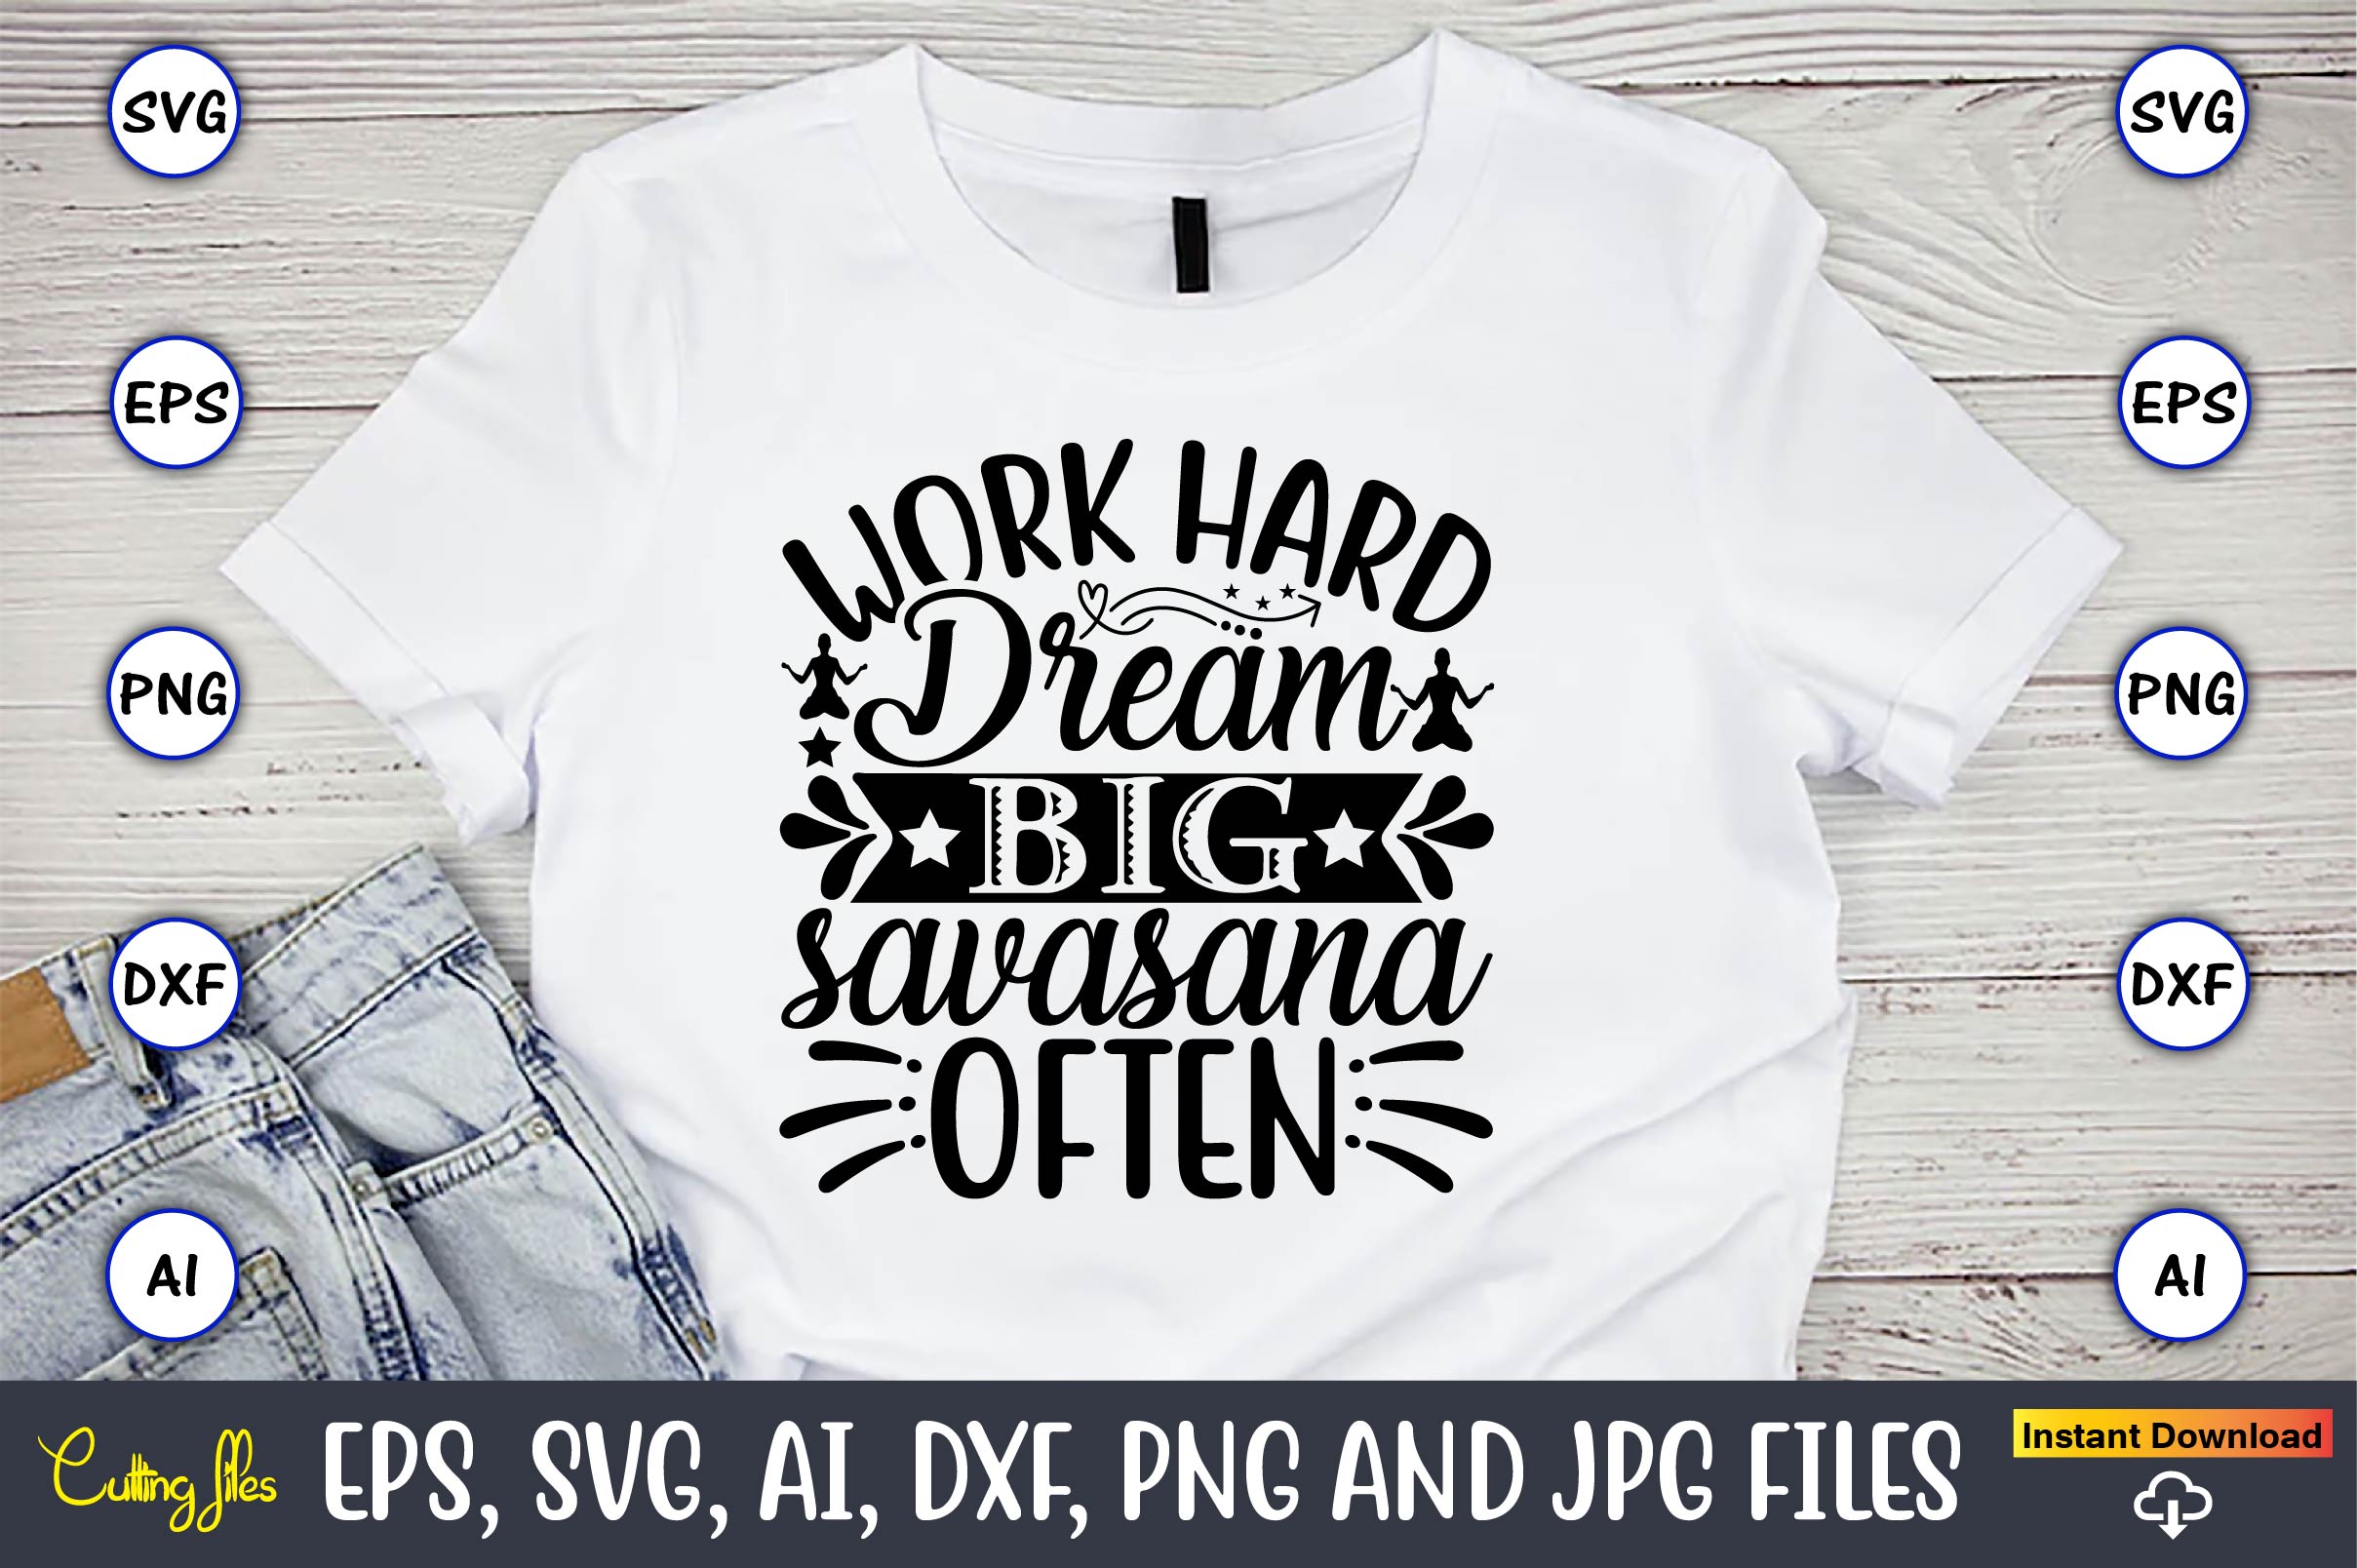 Image of a white t-shirt with a great slogan Work hard dream big savasana often.